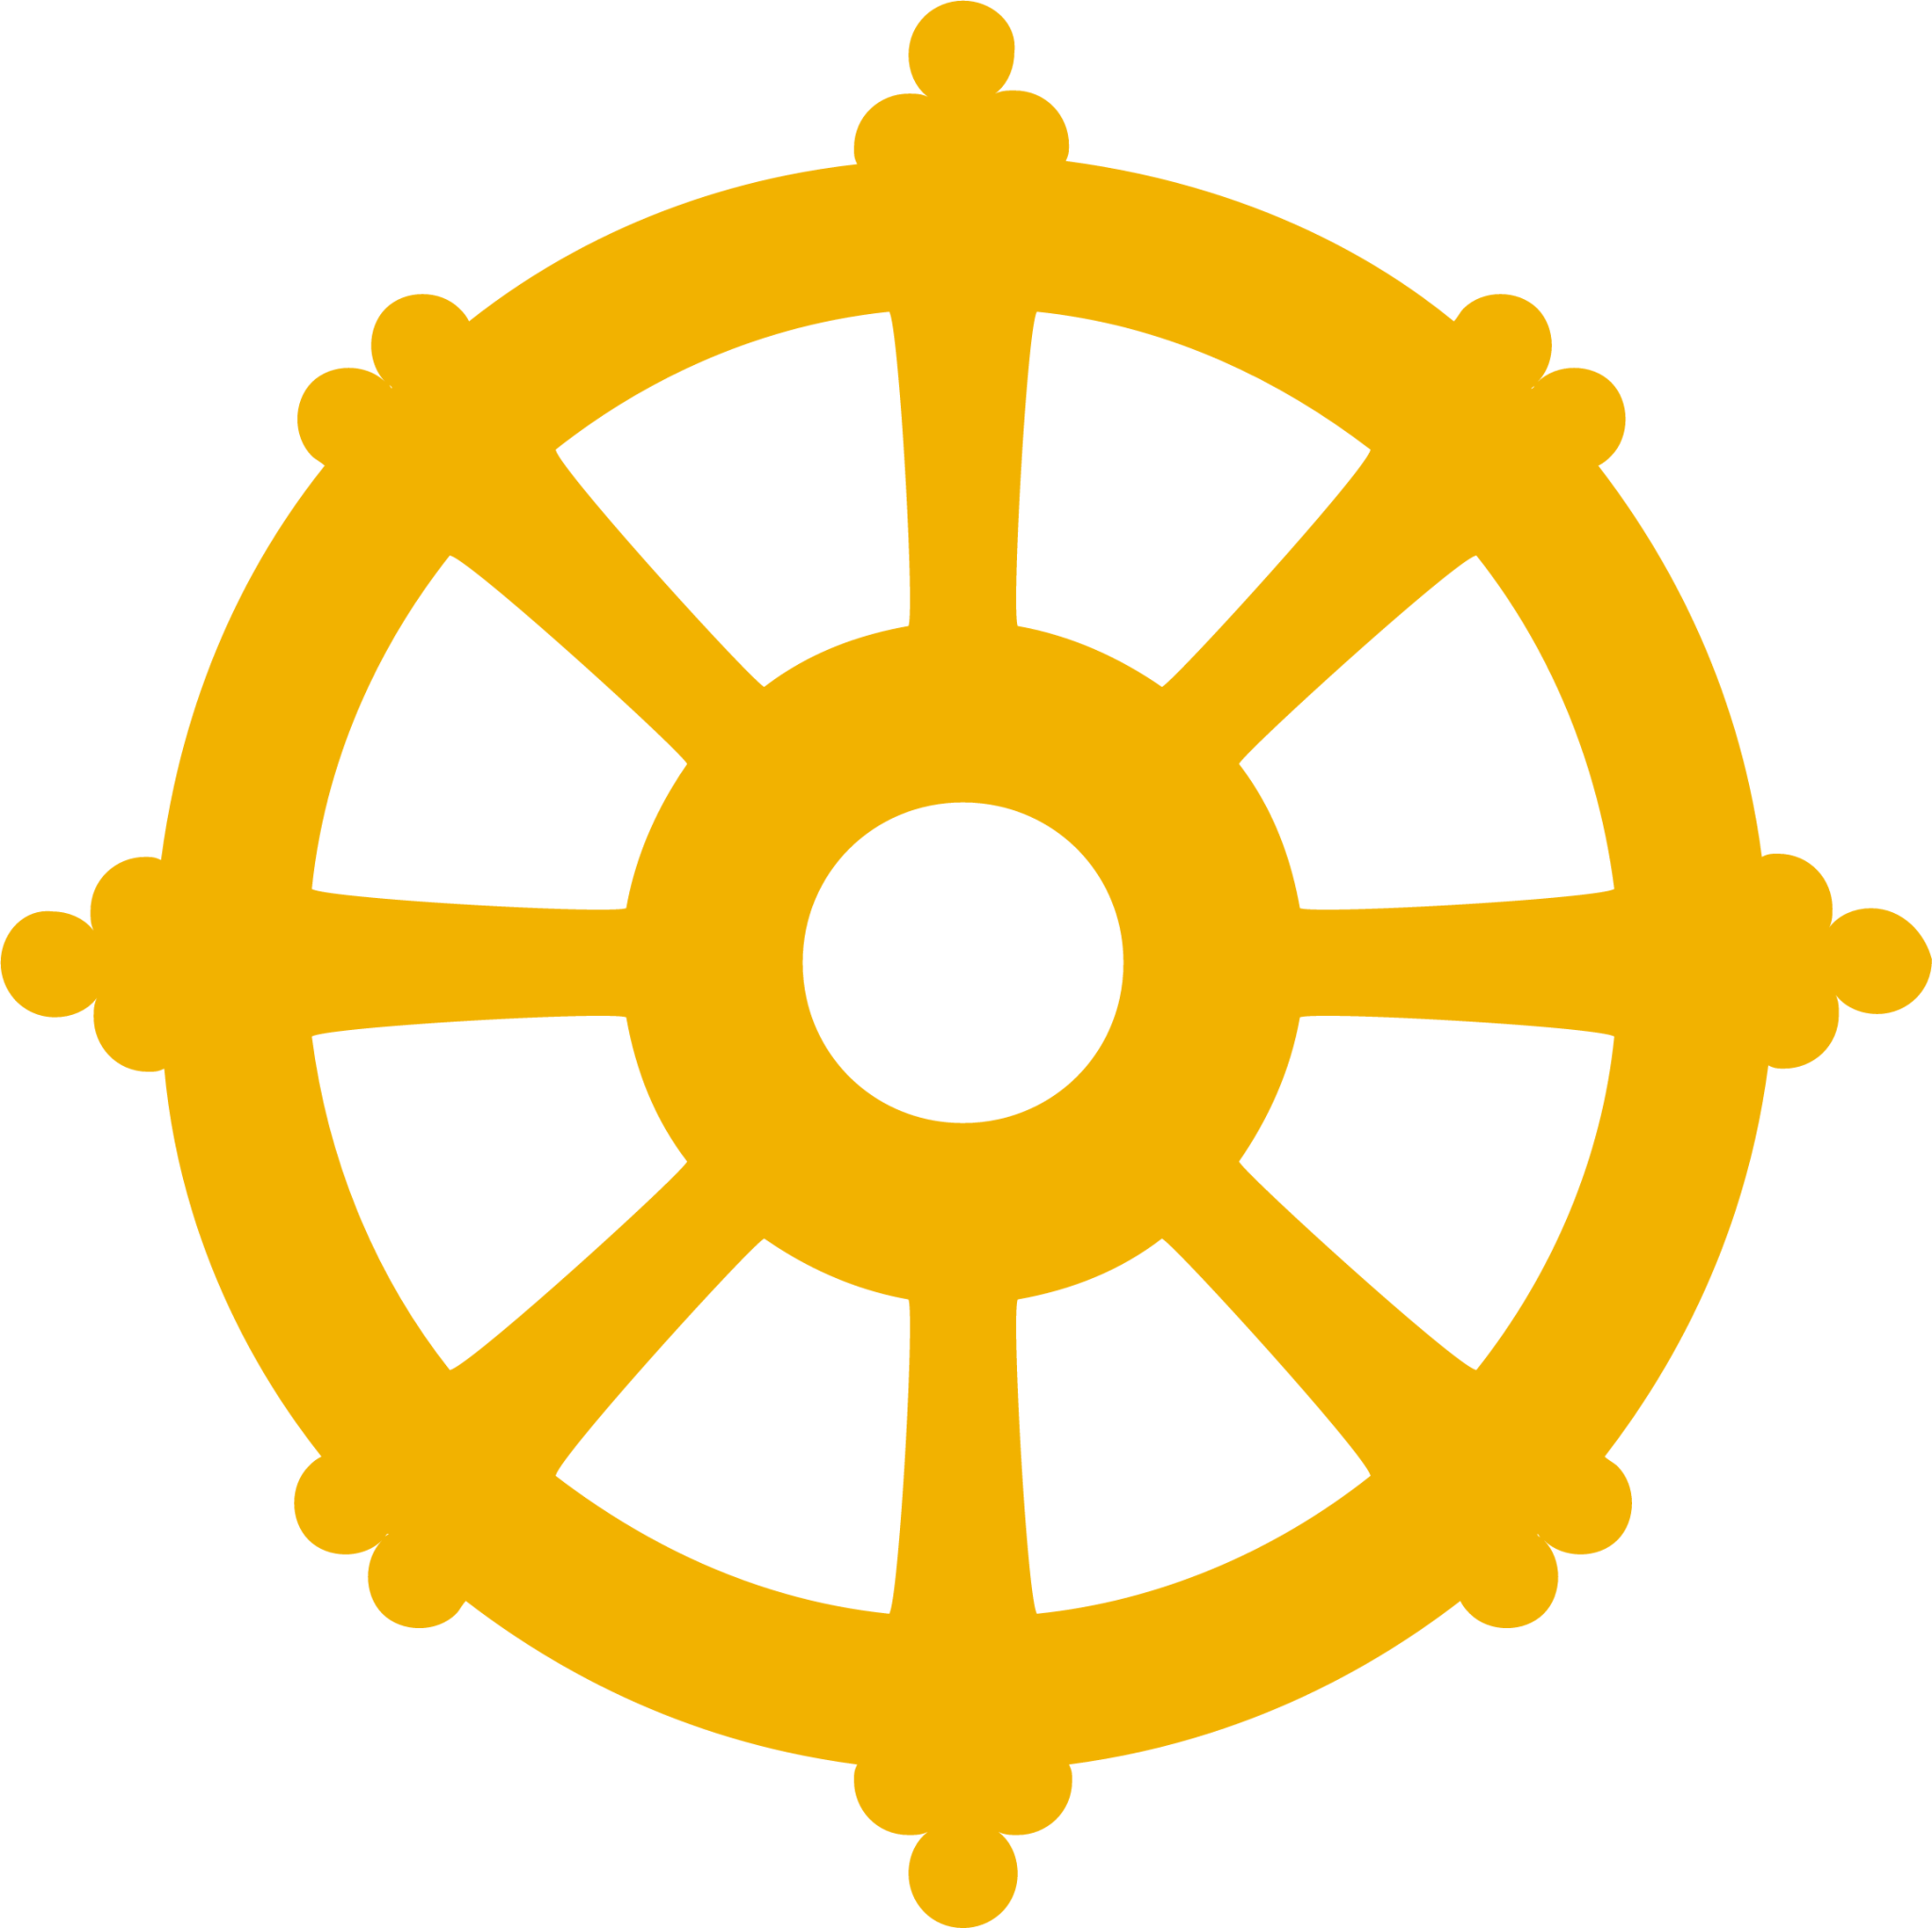 wheel of dharma emoji